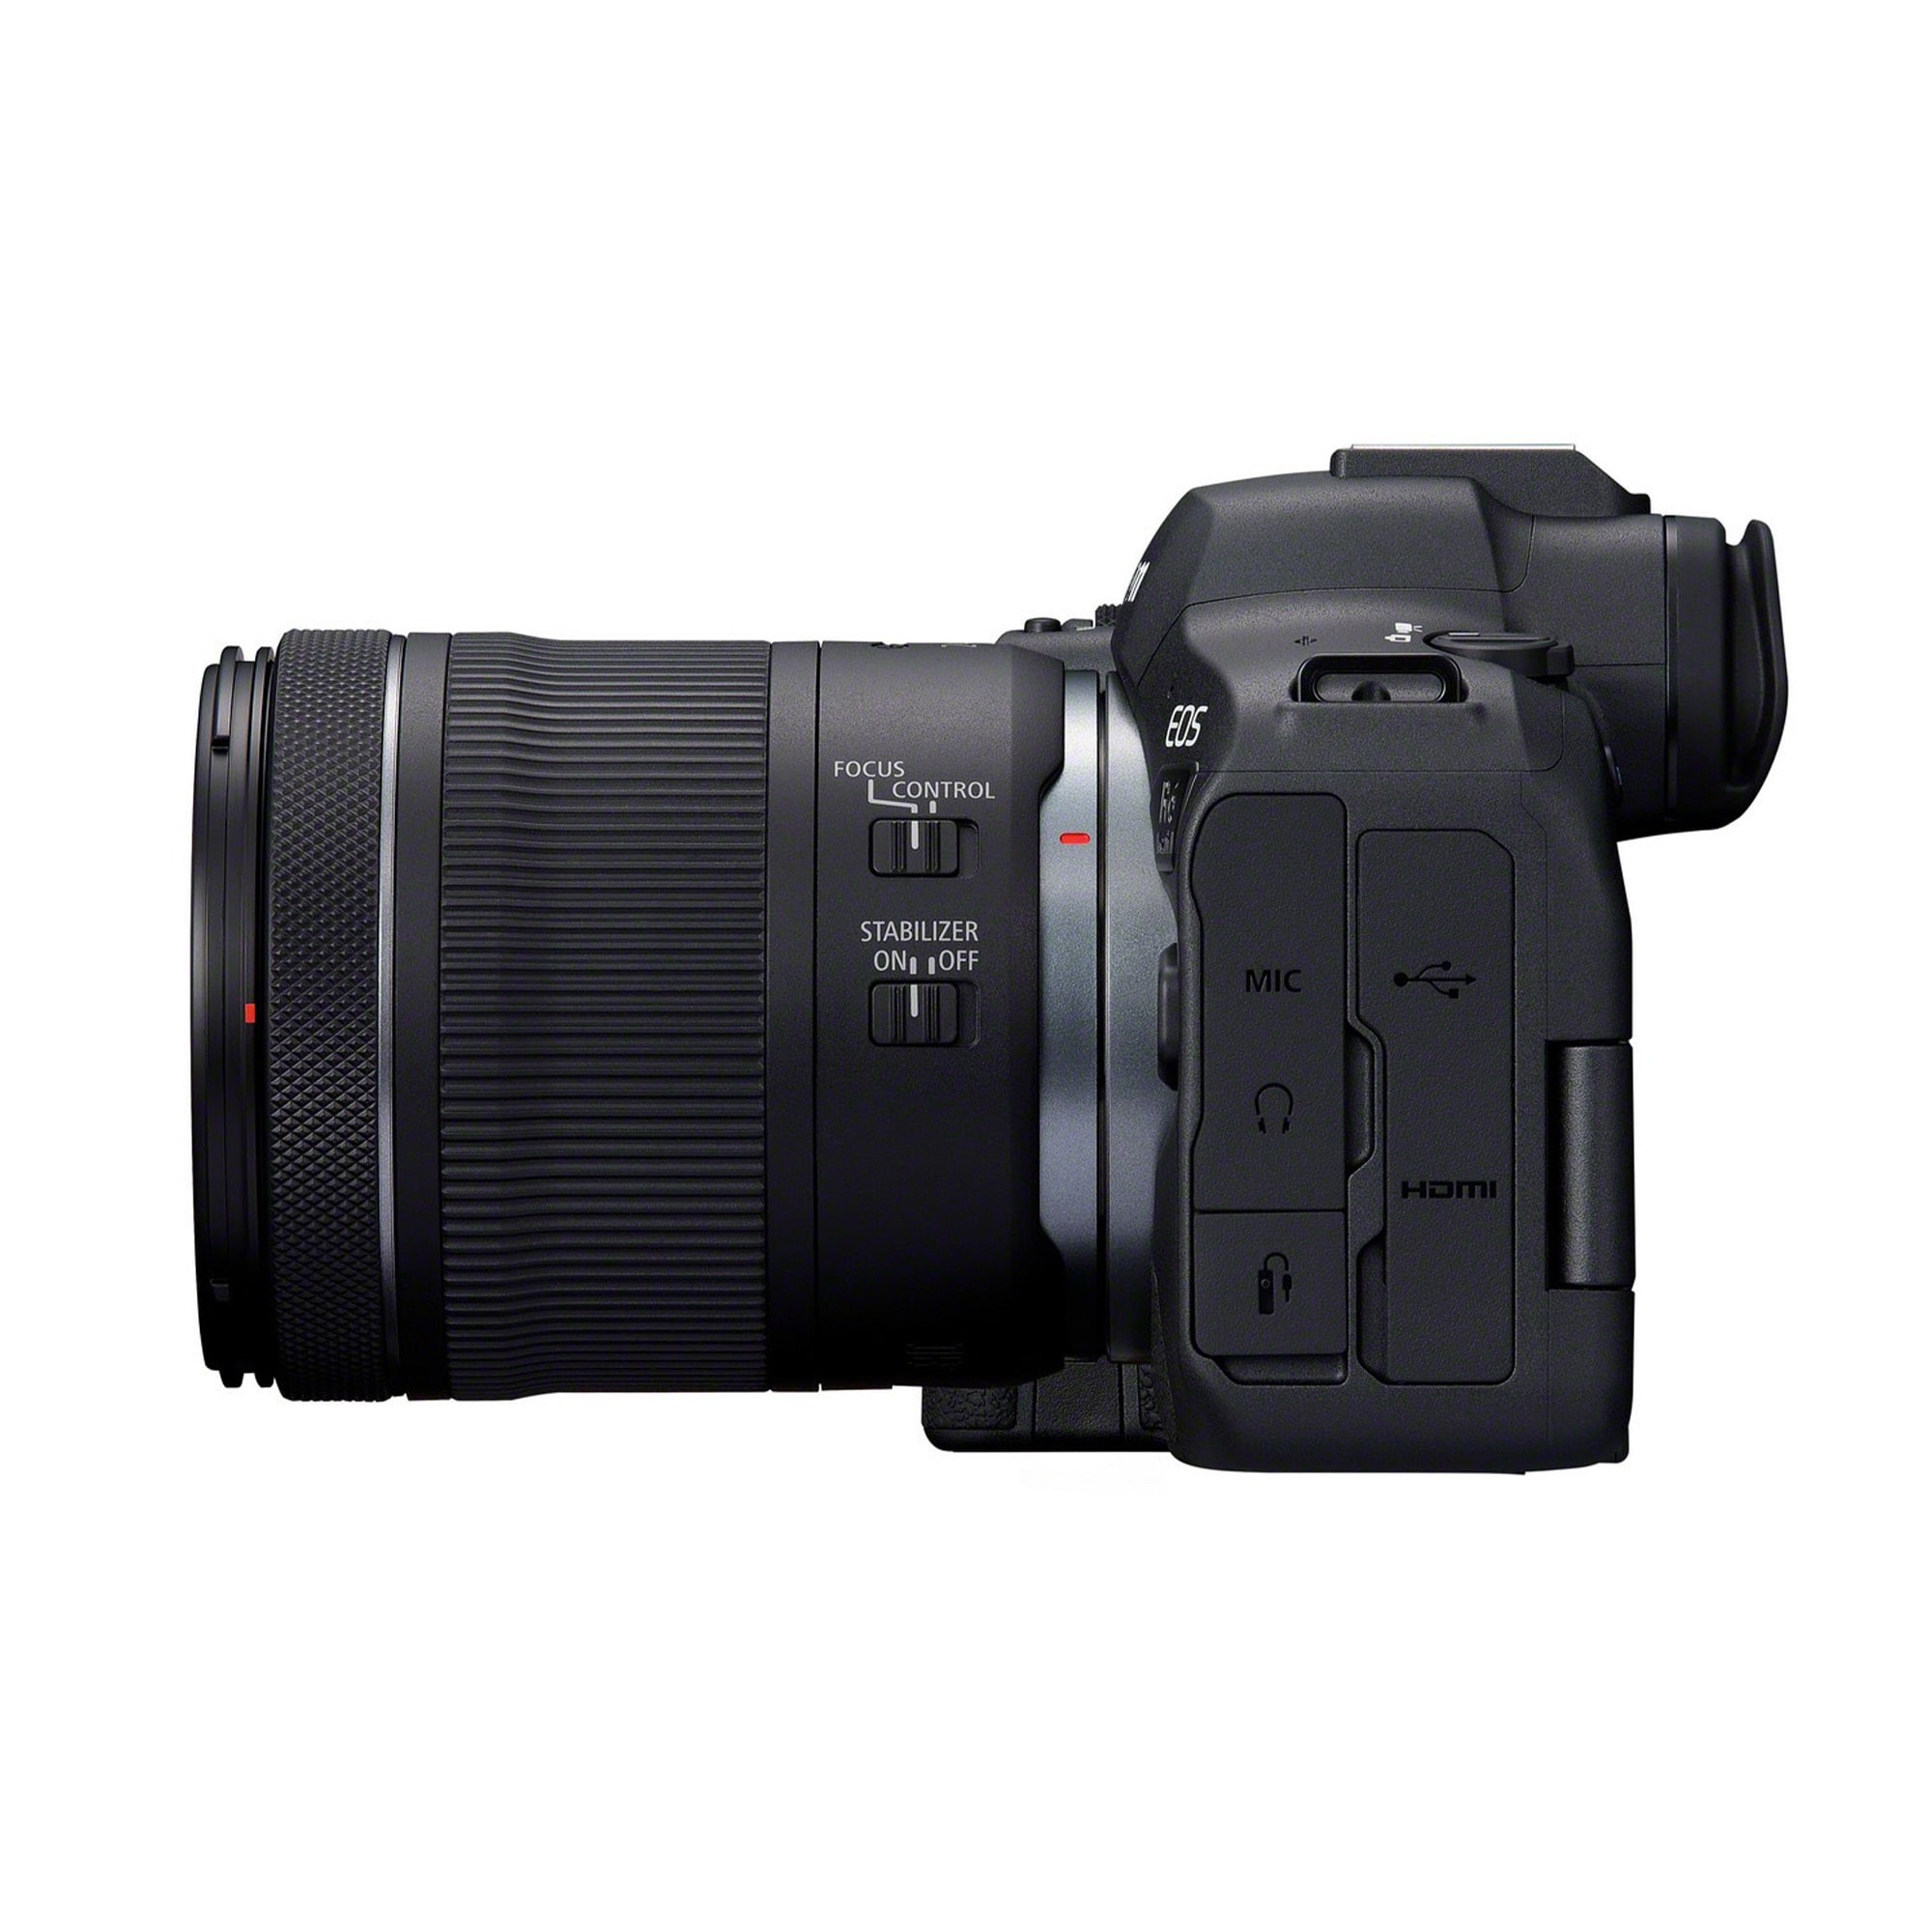 Canon EOS R6 Mark II + RF24-105 F4-7.1 IS STM